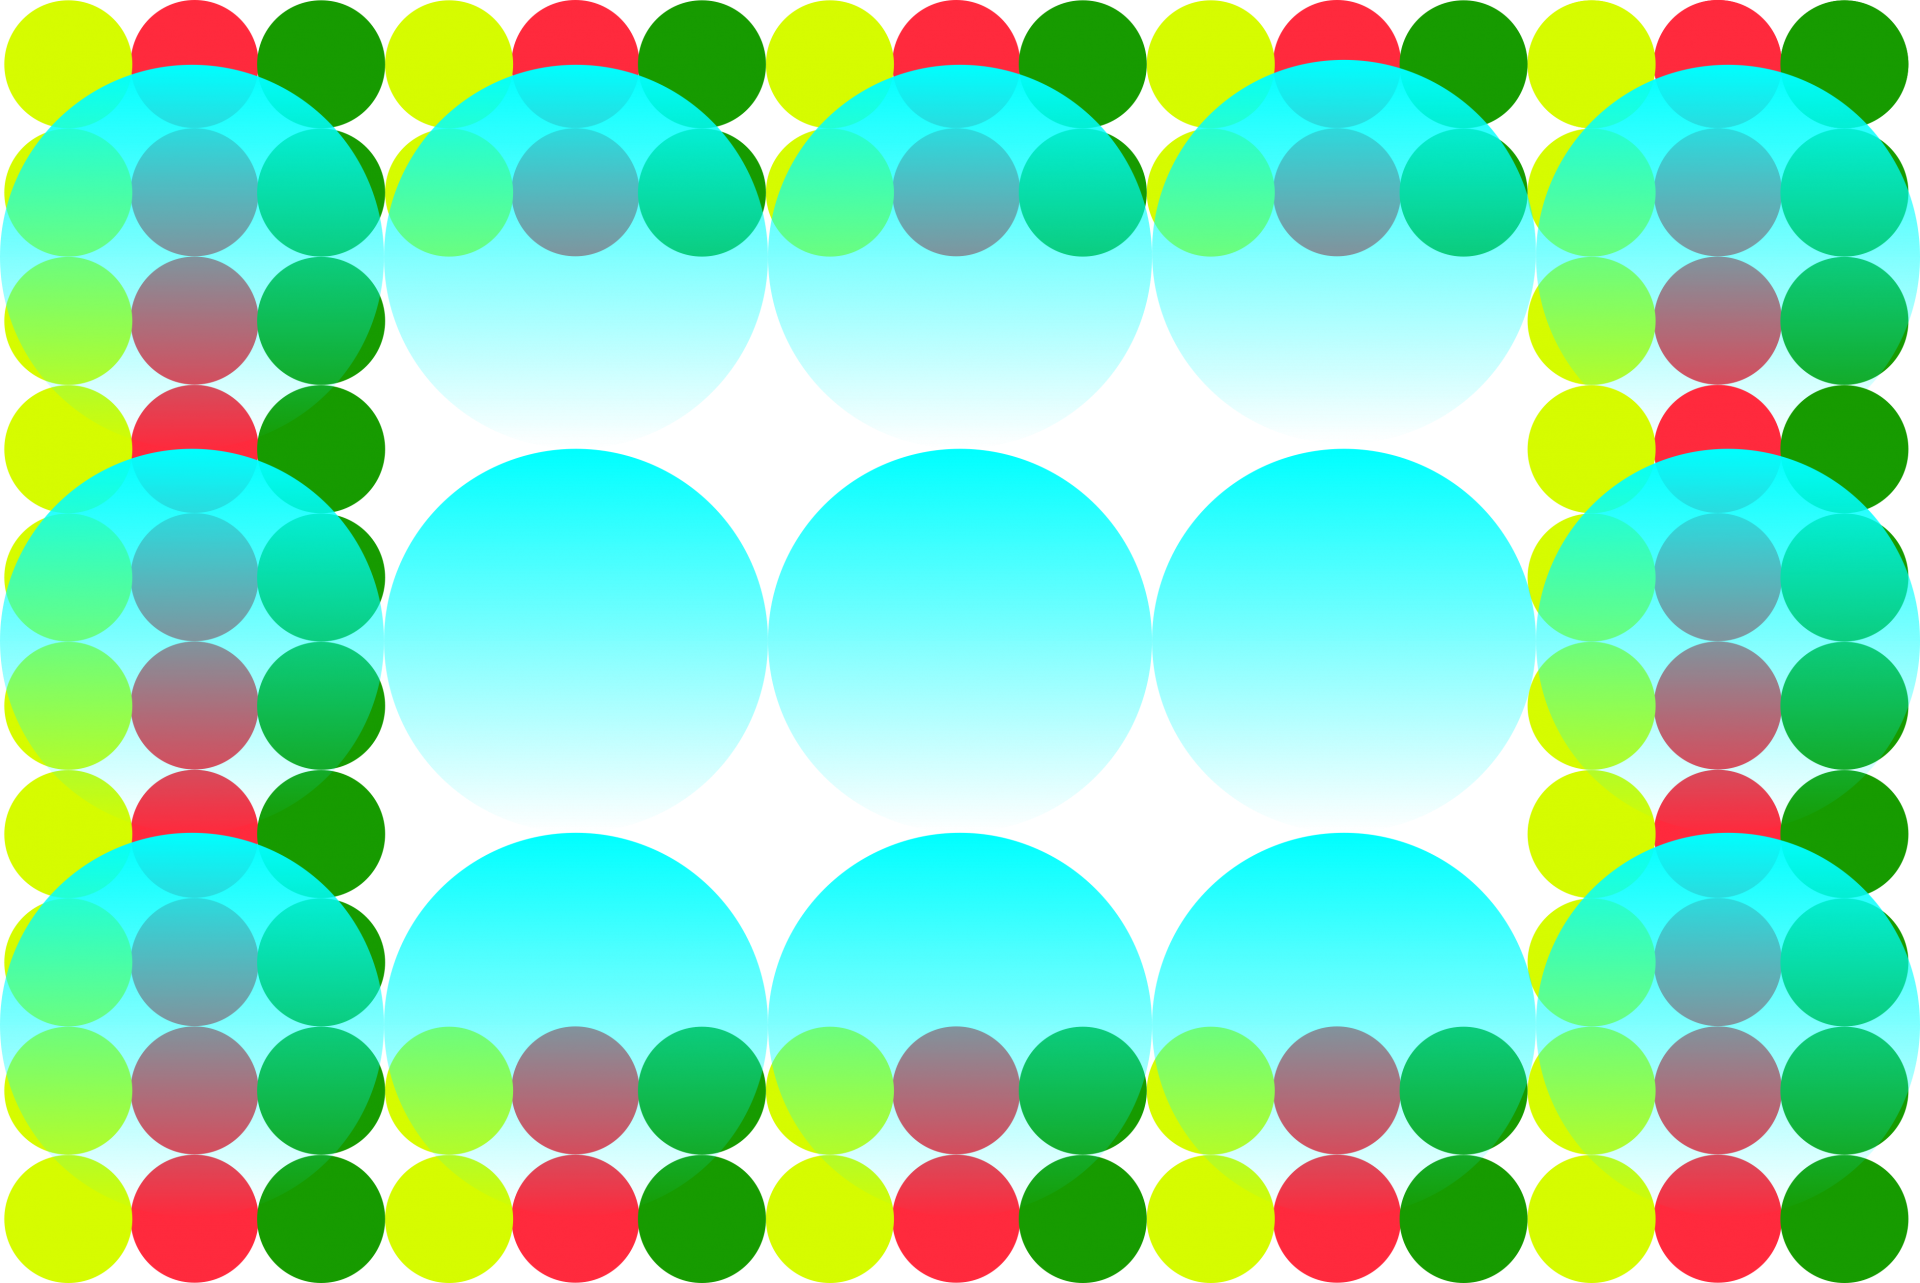 Colorful Circle Repeat Tile Pattern